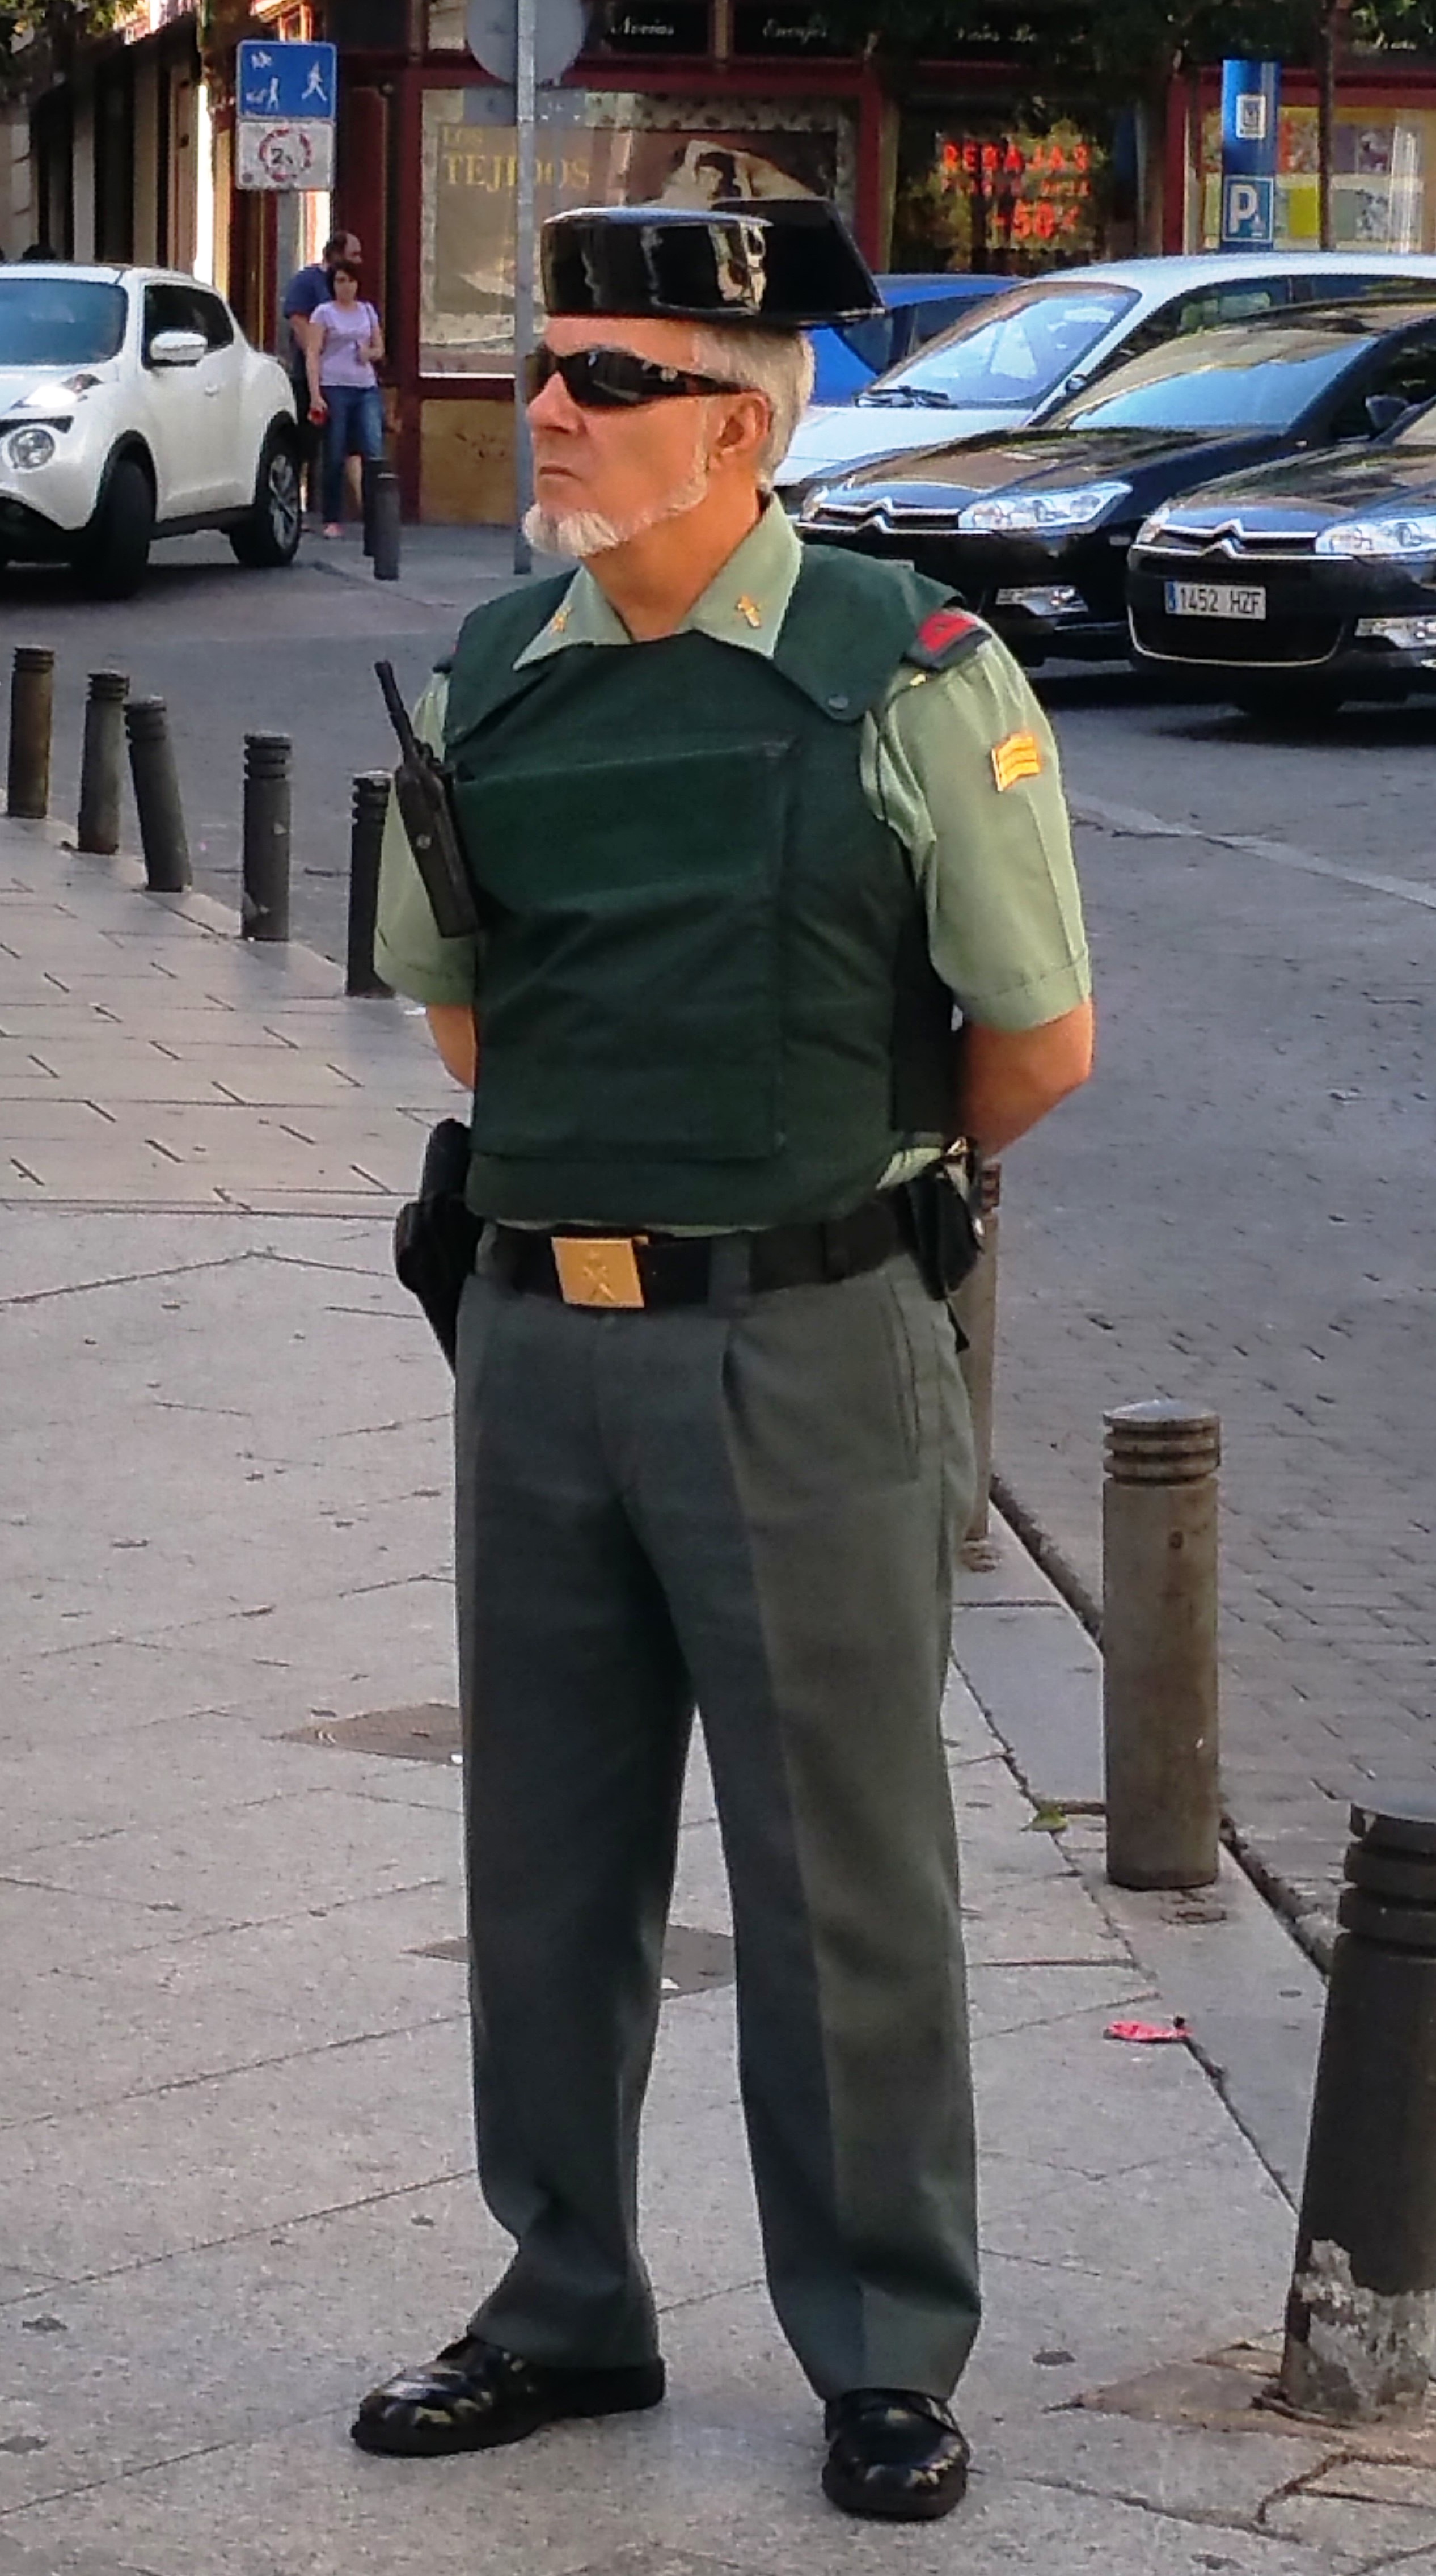 File:Guardia civil in Madrid 06.jpg - Wikimedia Commons